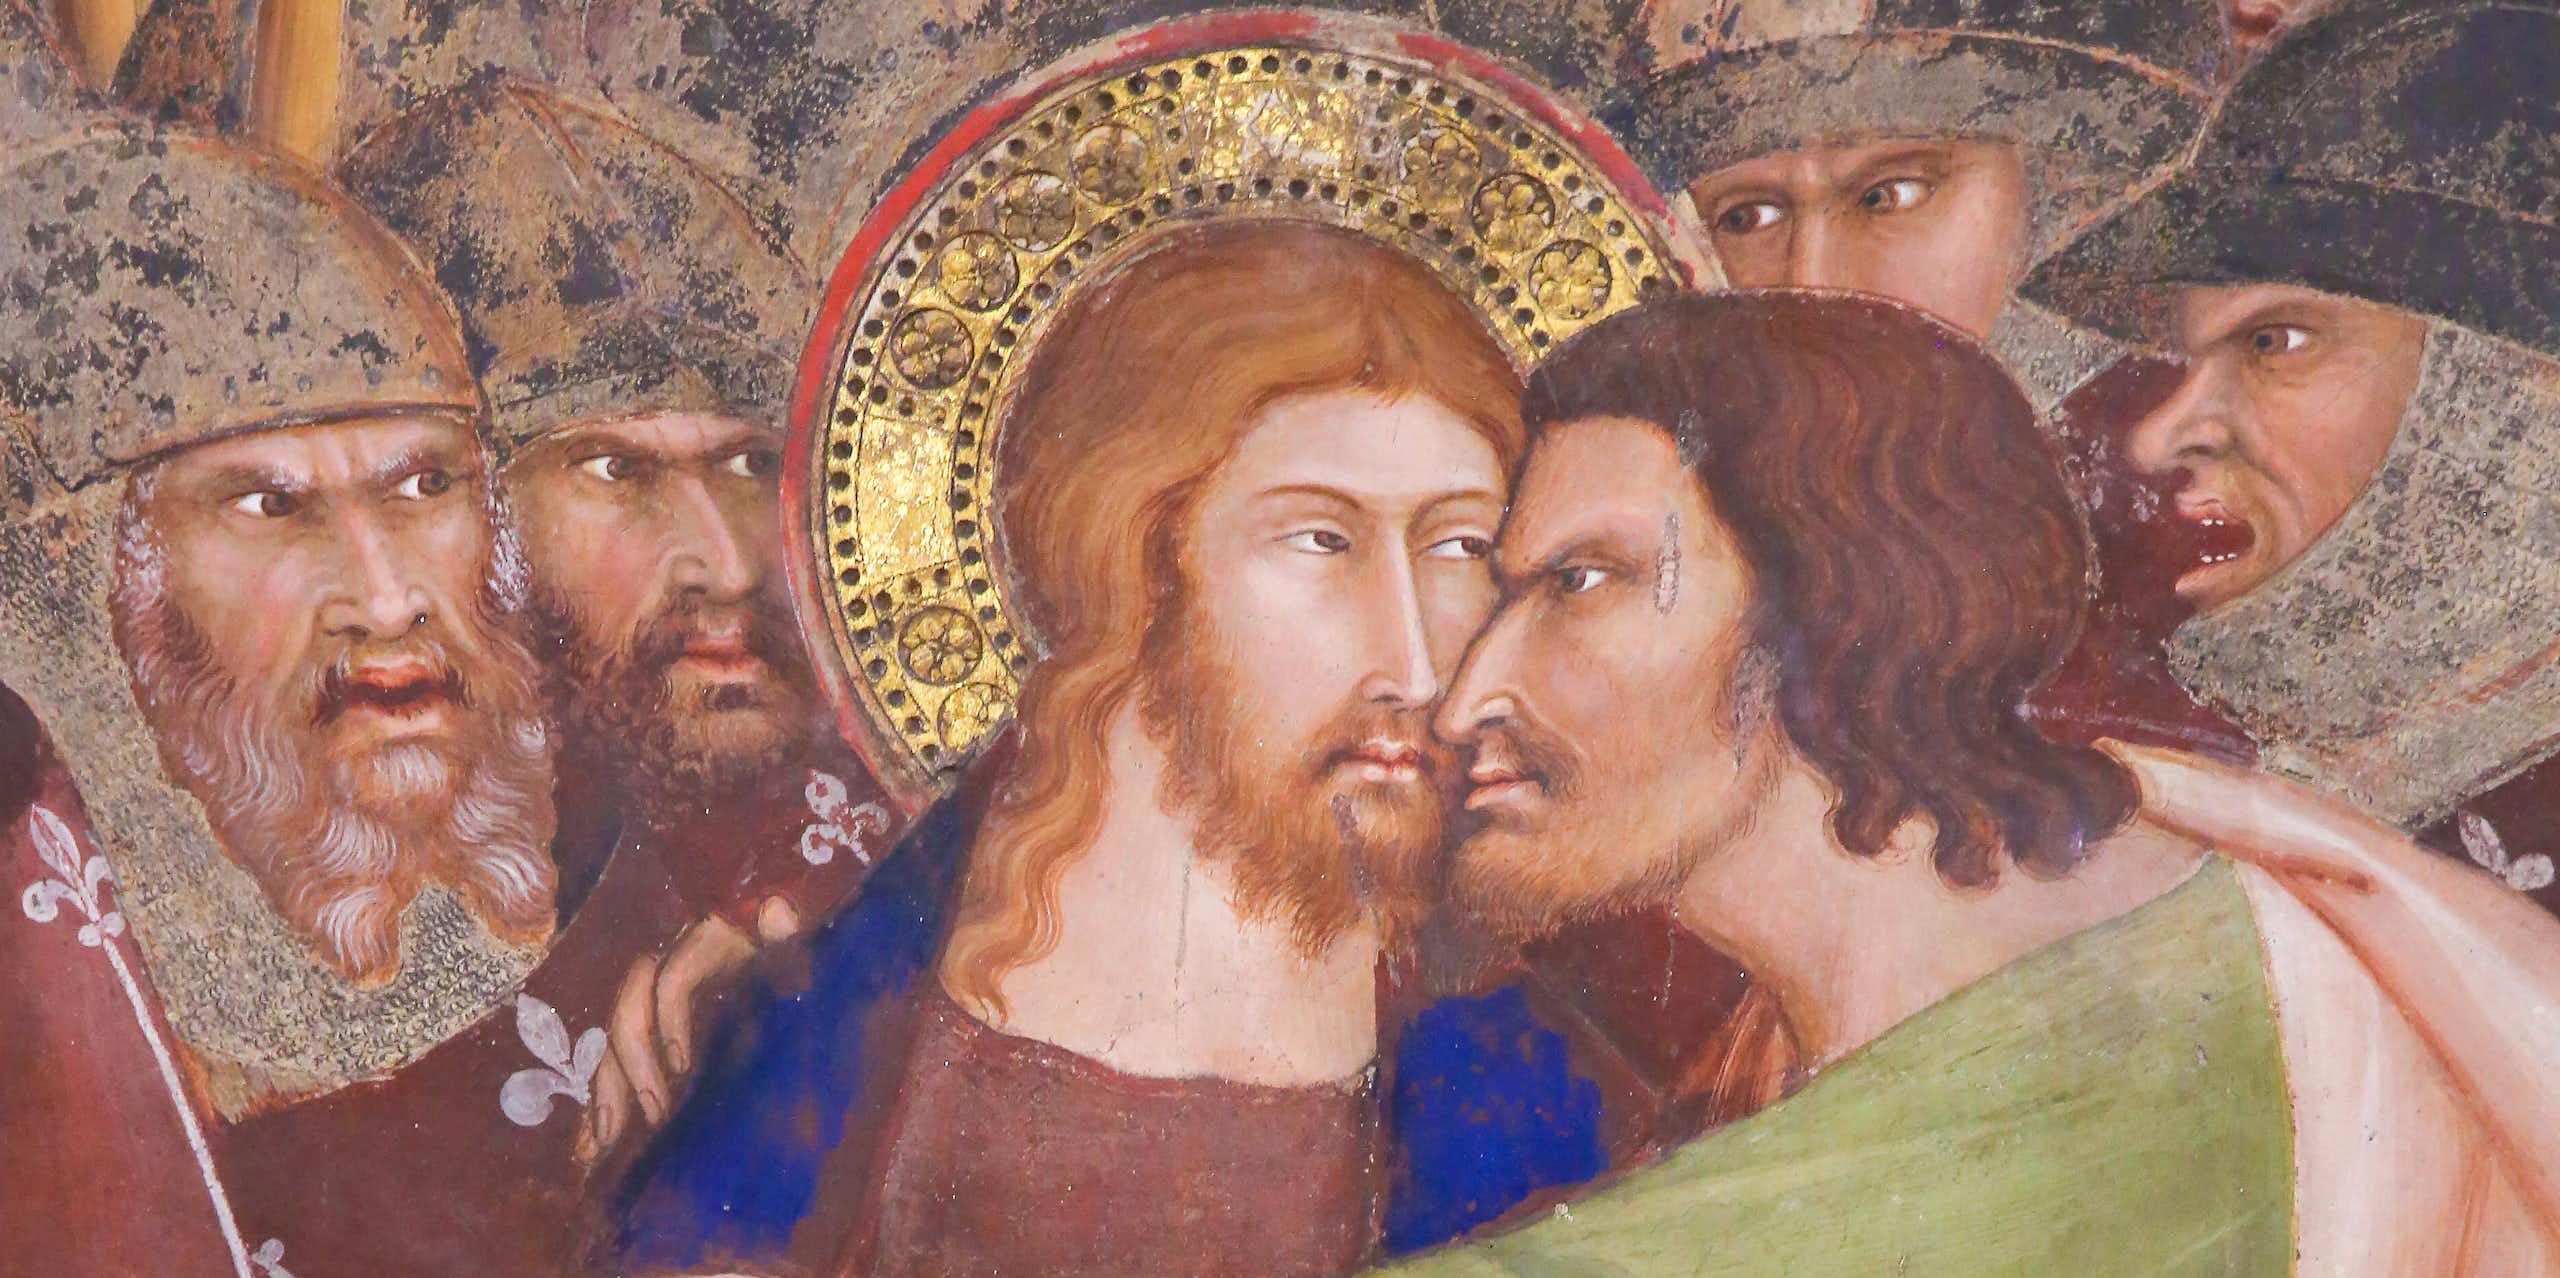 Detail from a fresco showing Judas betraying Jesus.